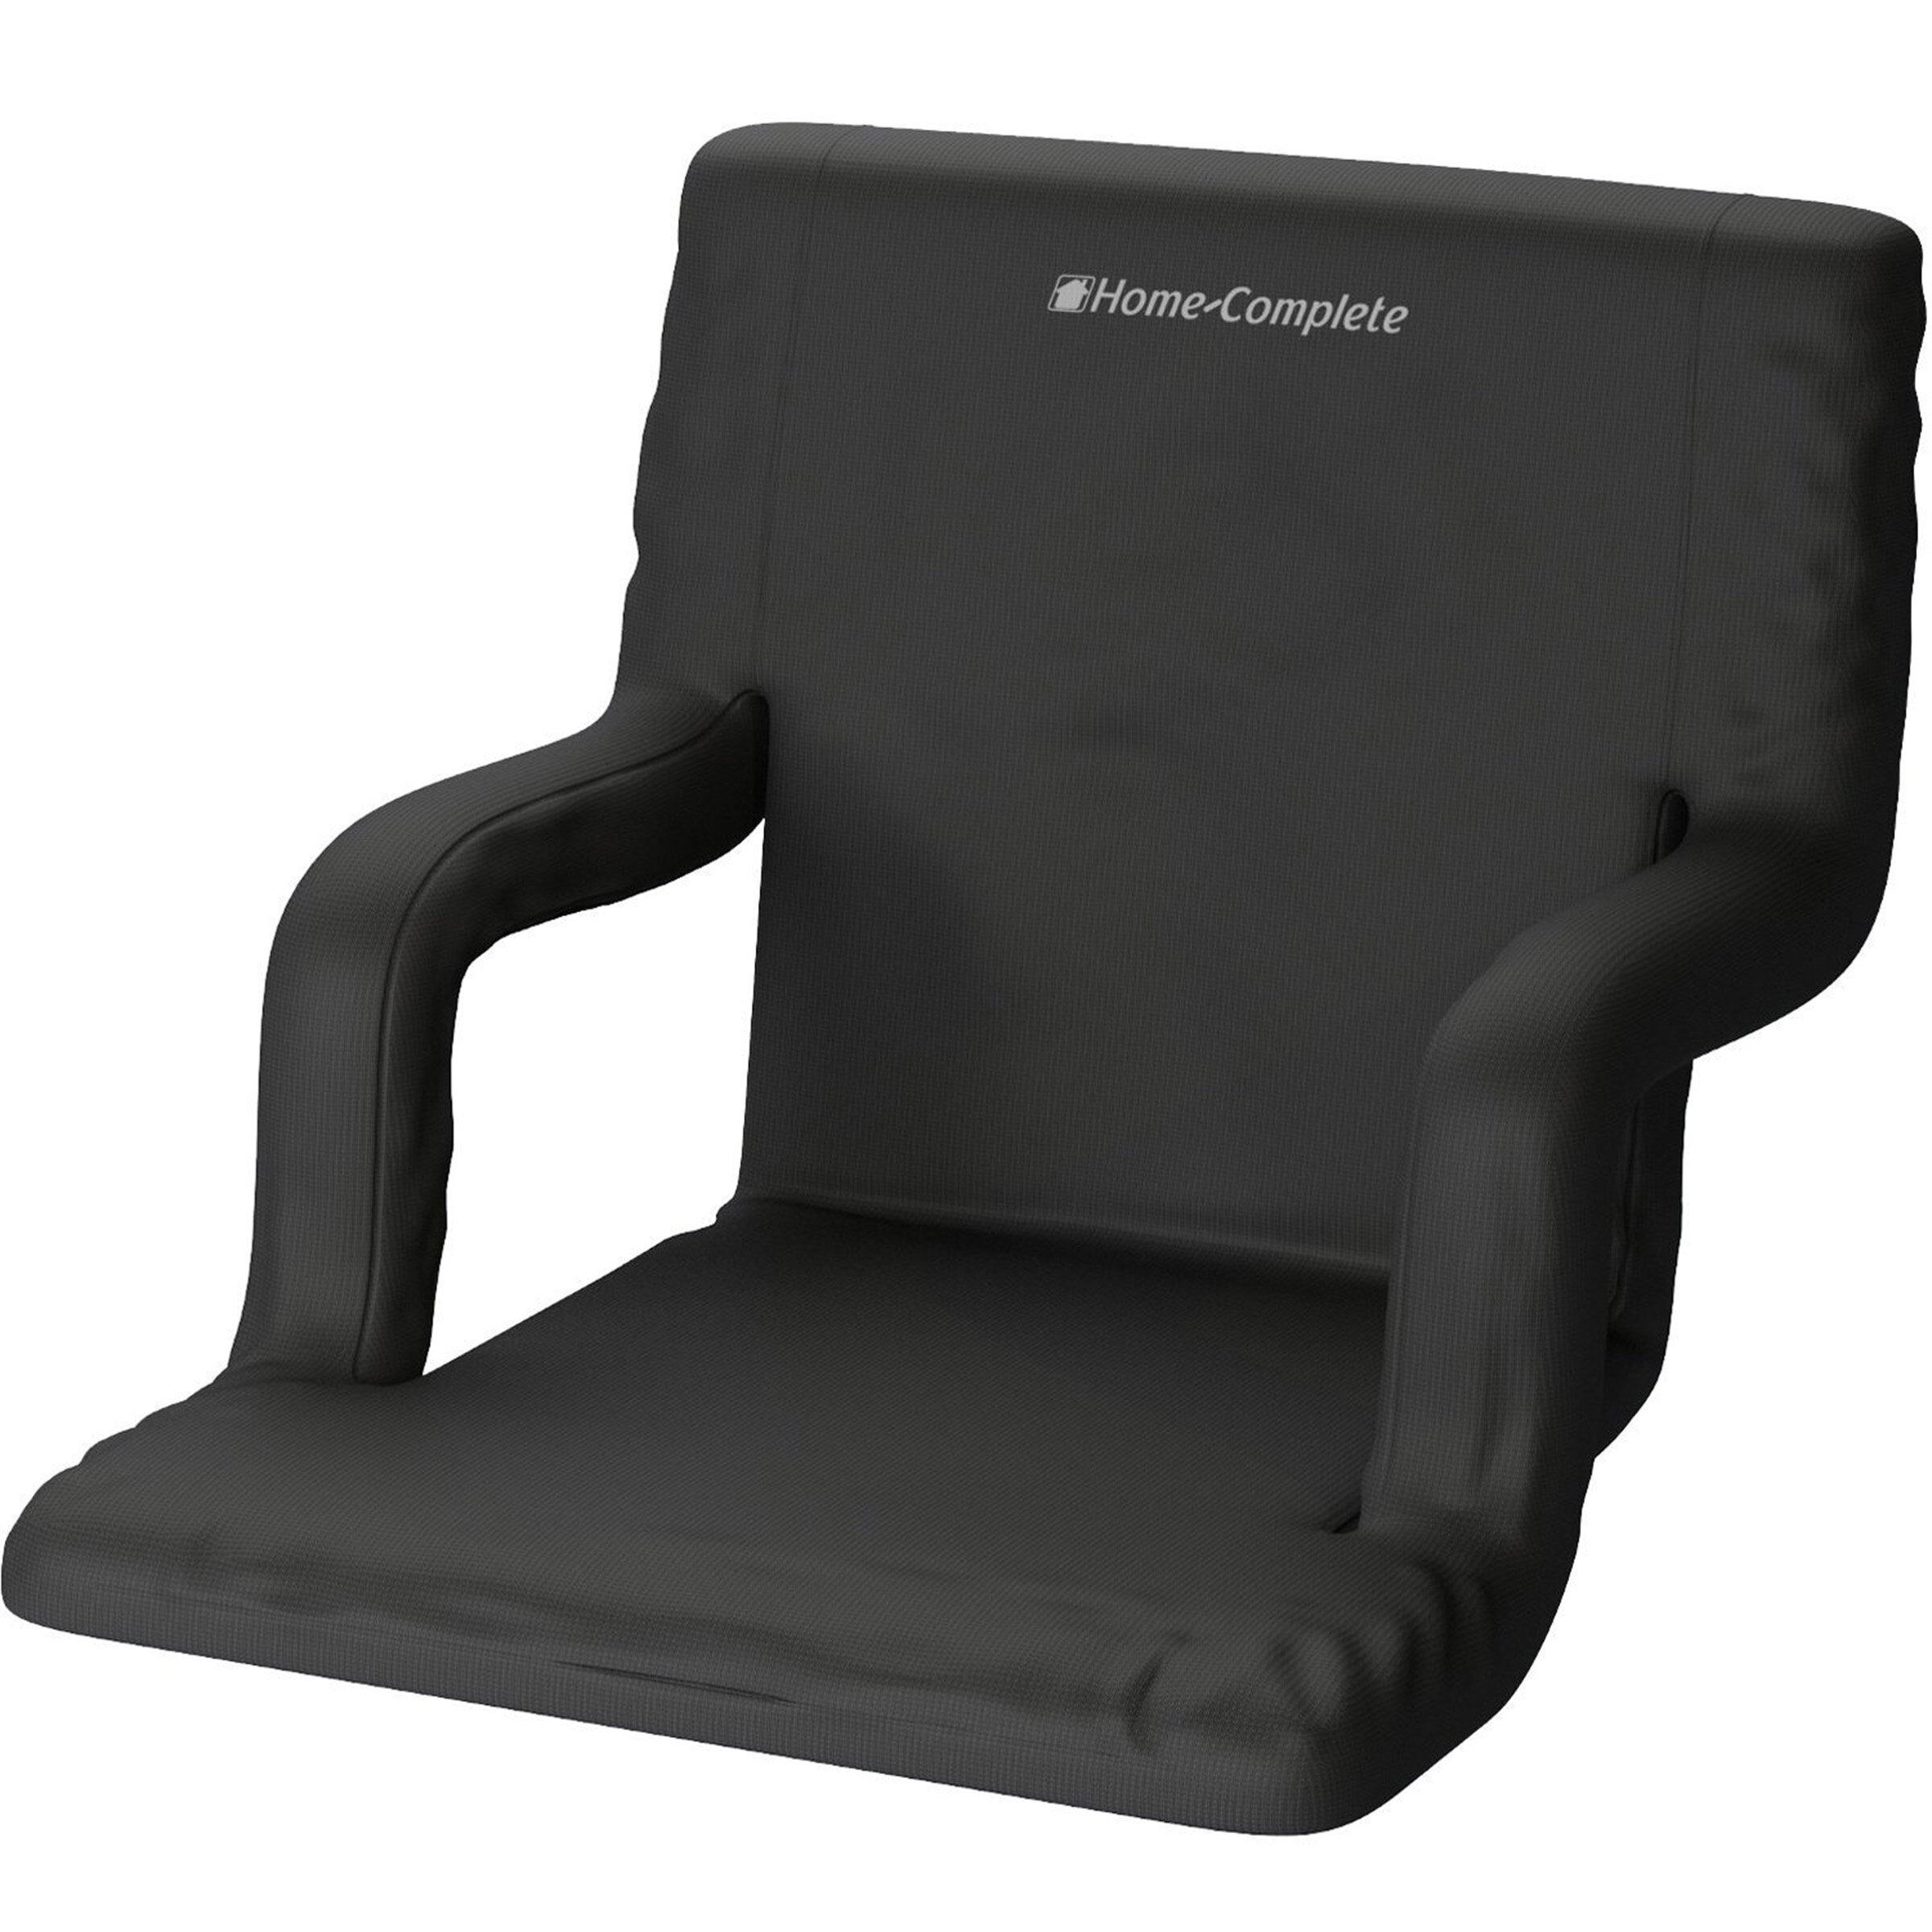 Portable Stadium Seat Portable Chair w/ Back Sponge Padded Cushion Pocket Design